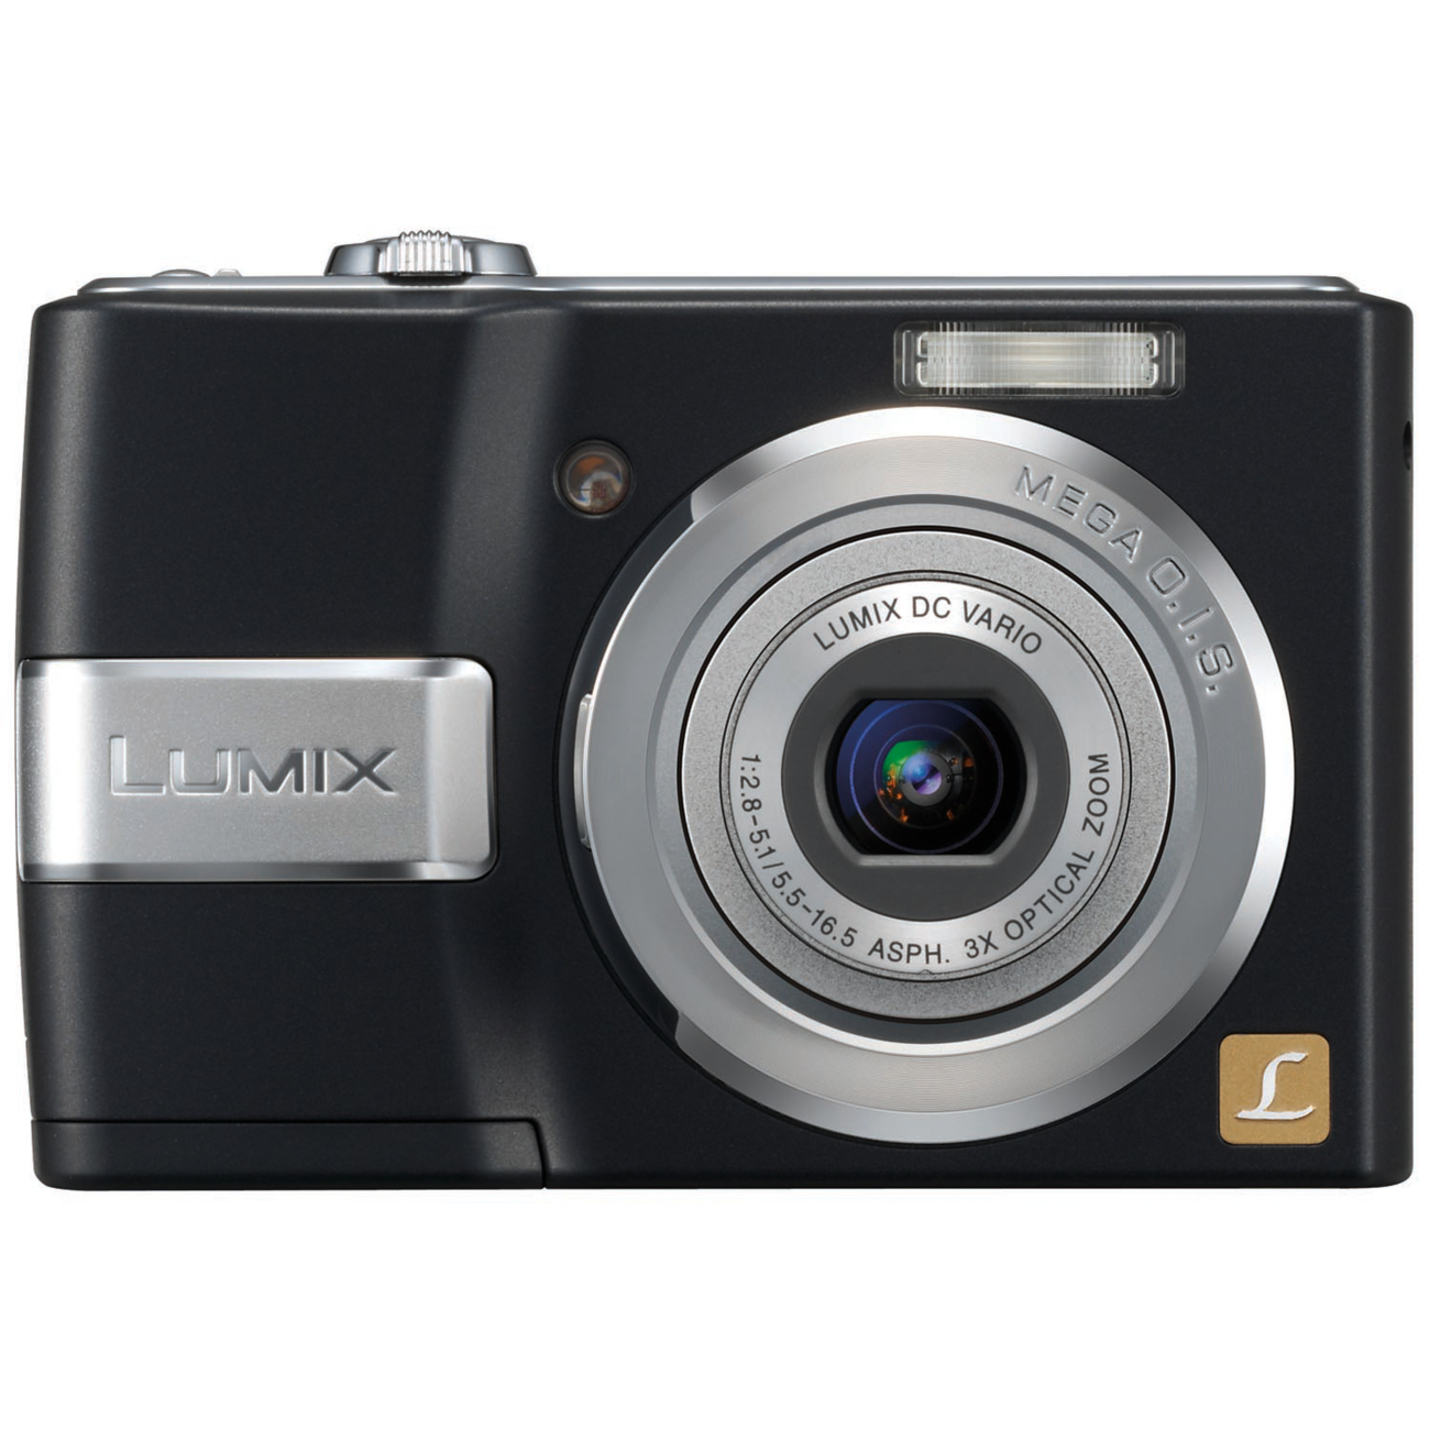 Panasonic Lumix DMC-LS80 8.1 Megapixel Compact Camera, Black - image 1 of 5